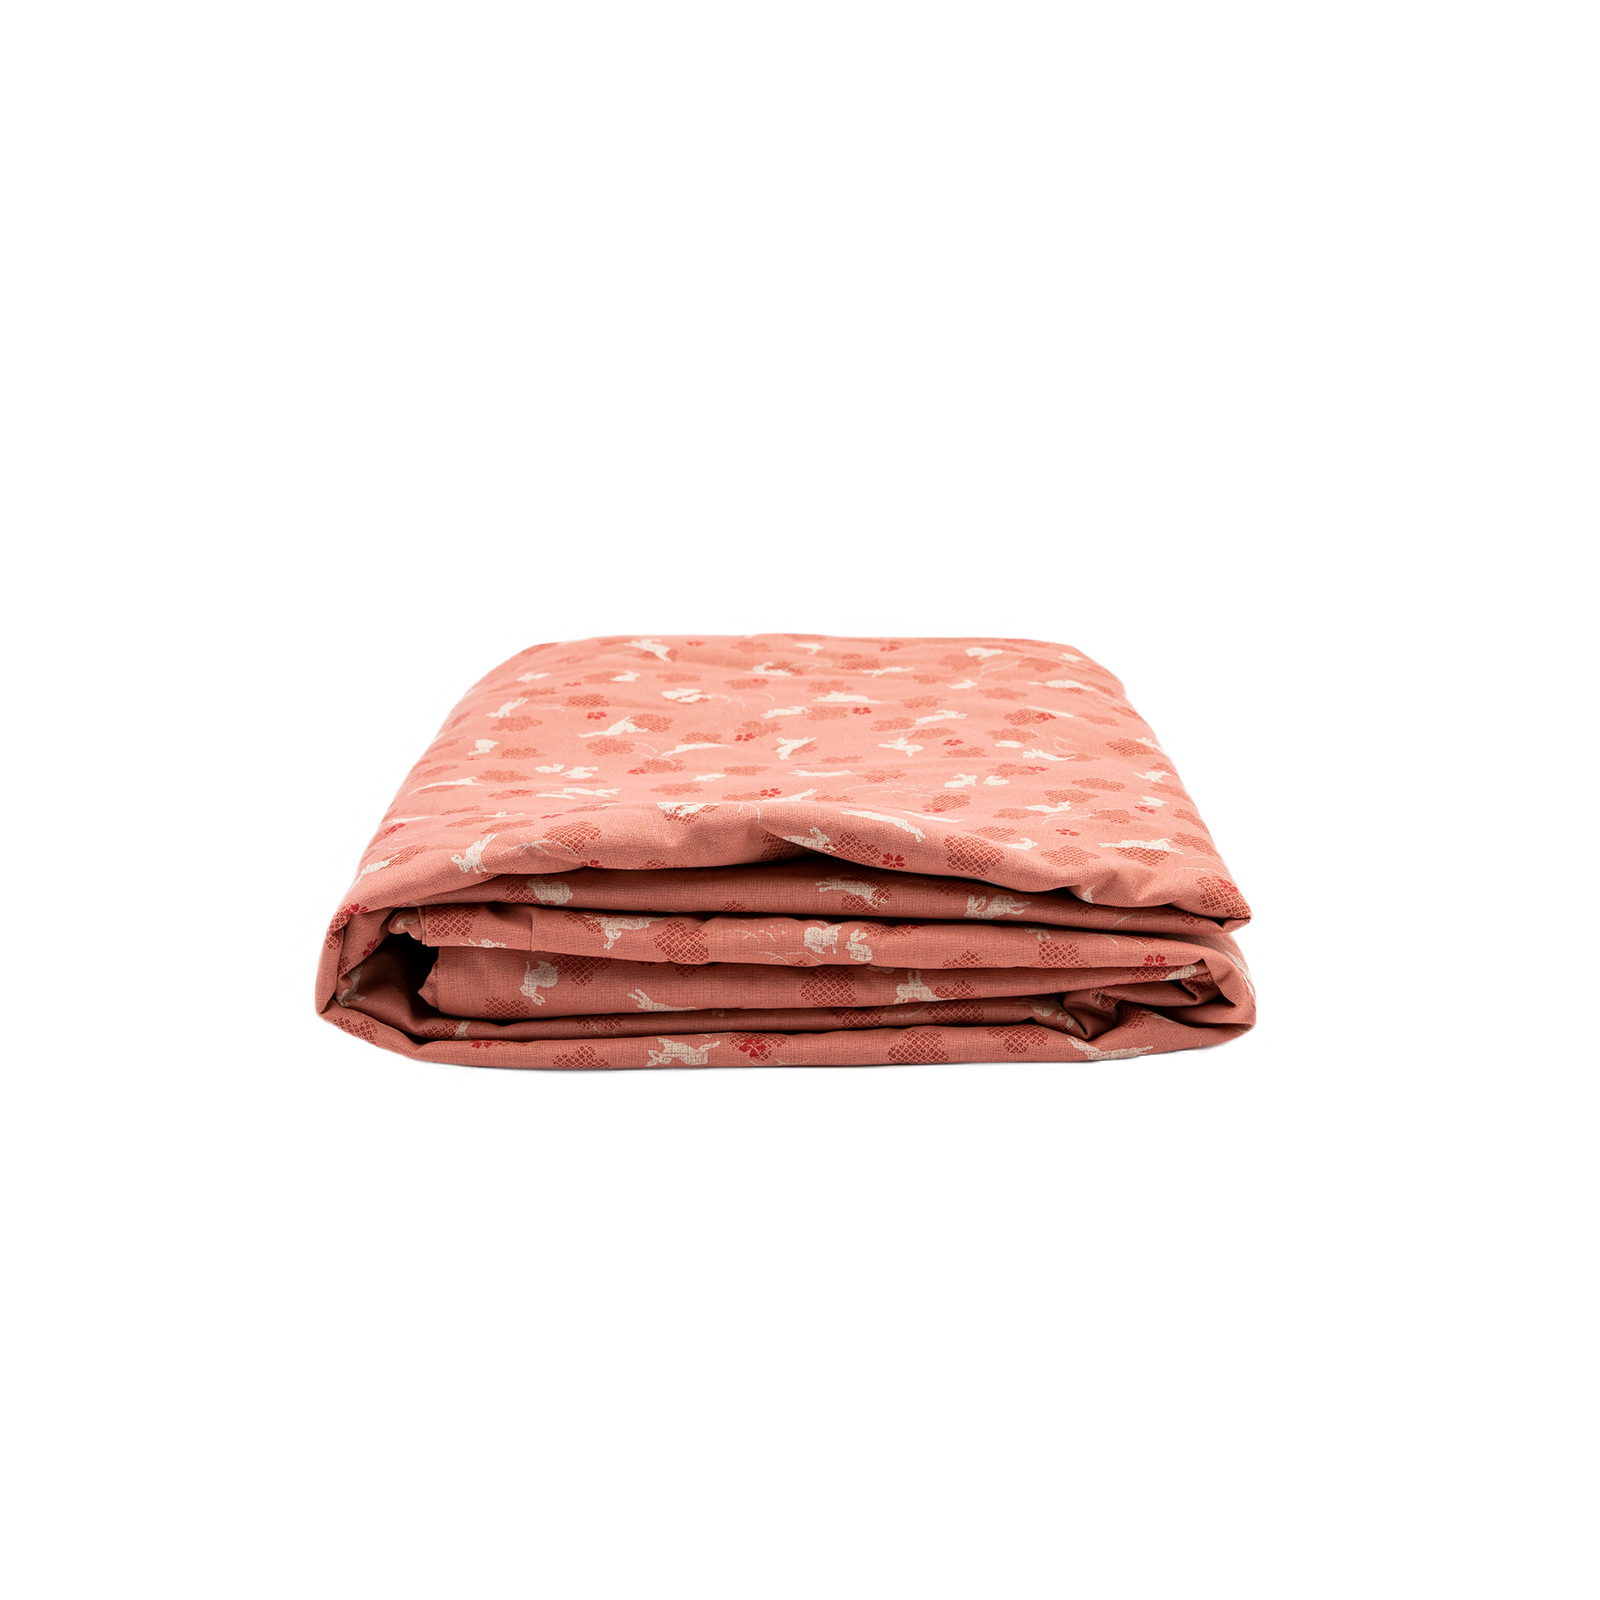 J-Life Usagi Pink Custom Kakefuton with Removable Cover_Kakefutons_Kakefuton with custom cover_Japan Tradition_Sleep System_Handmade